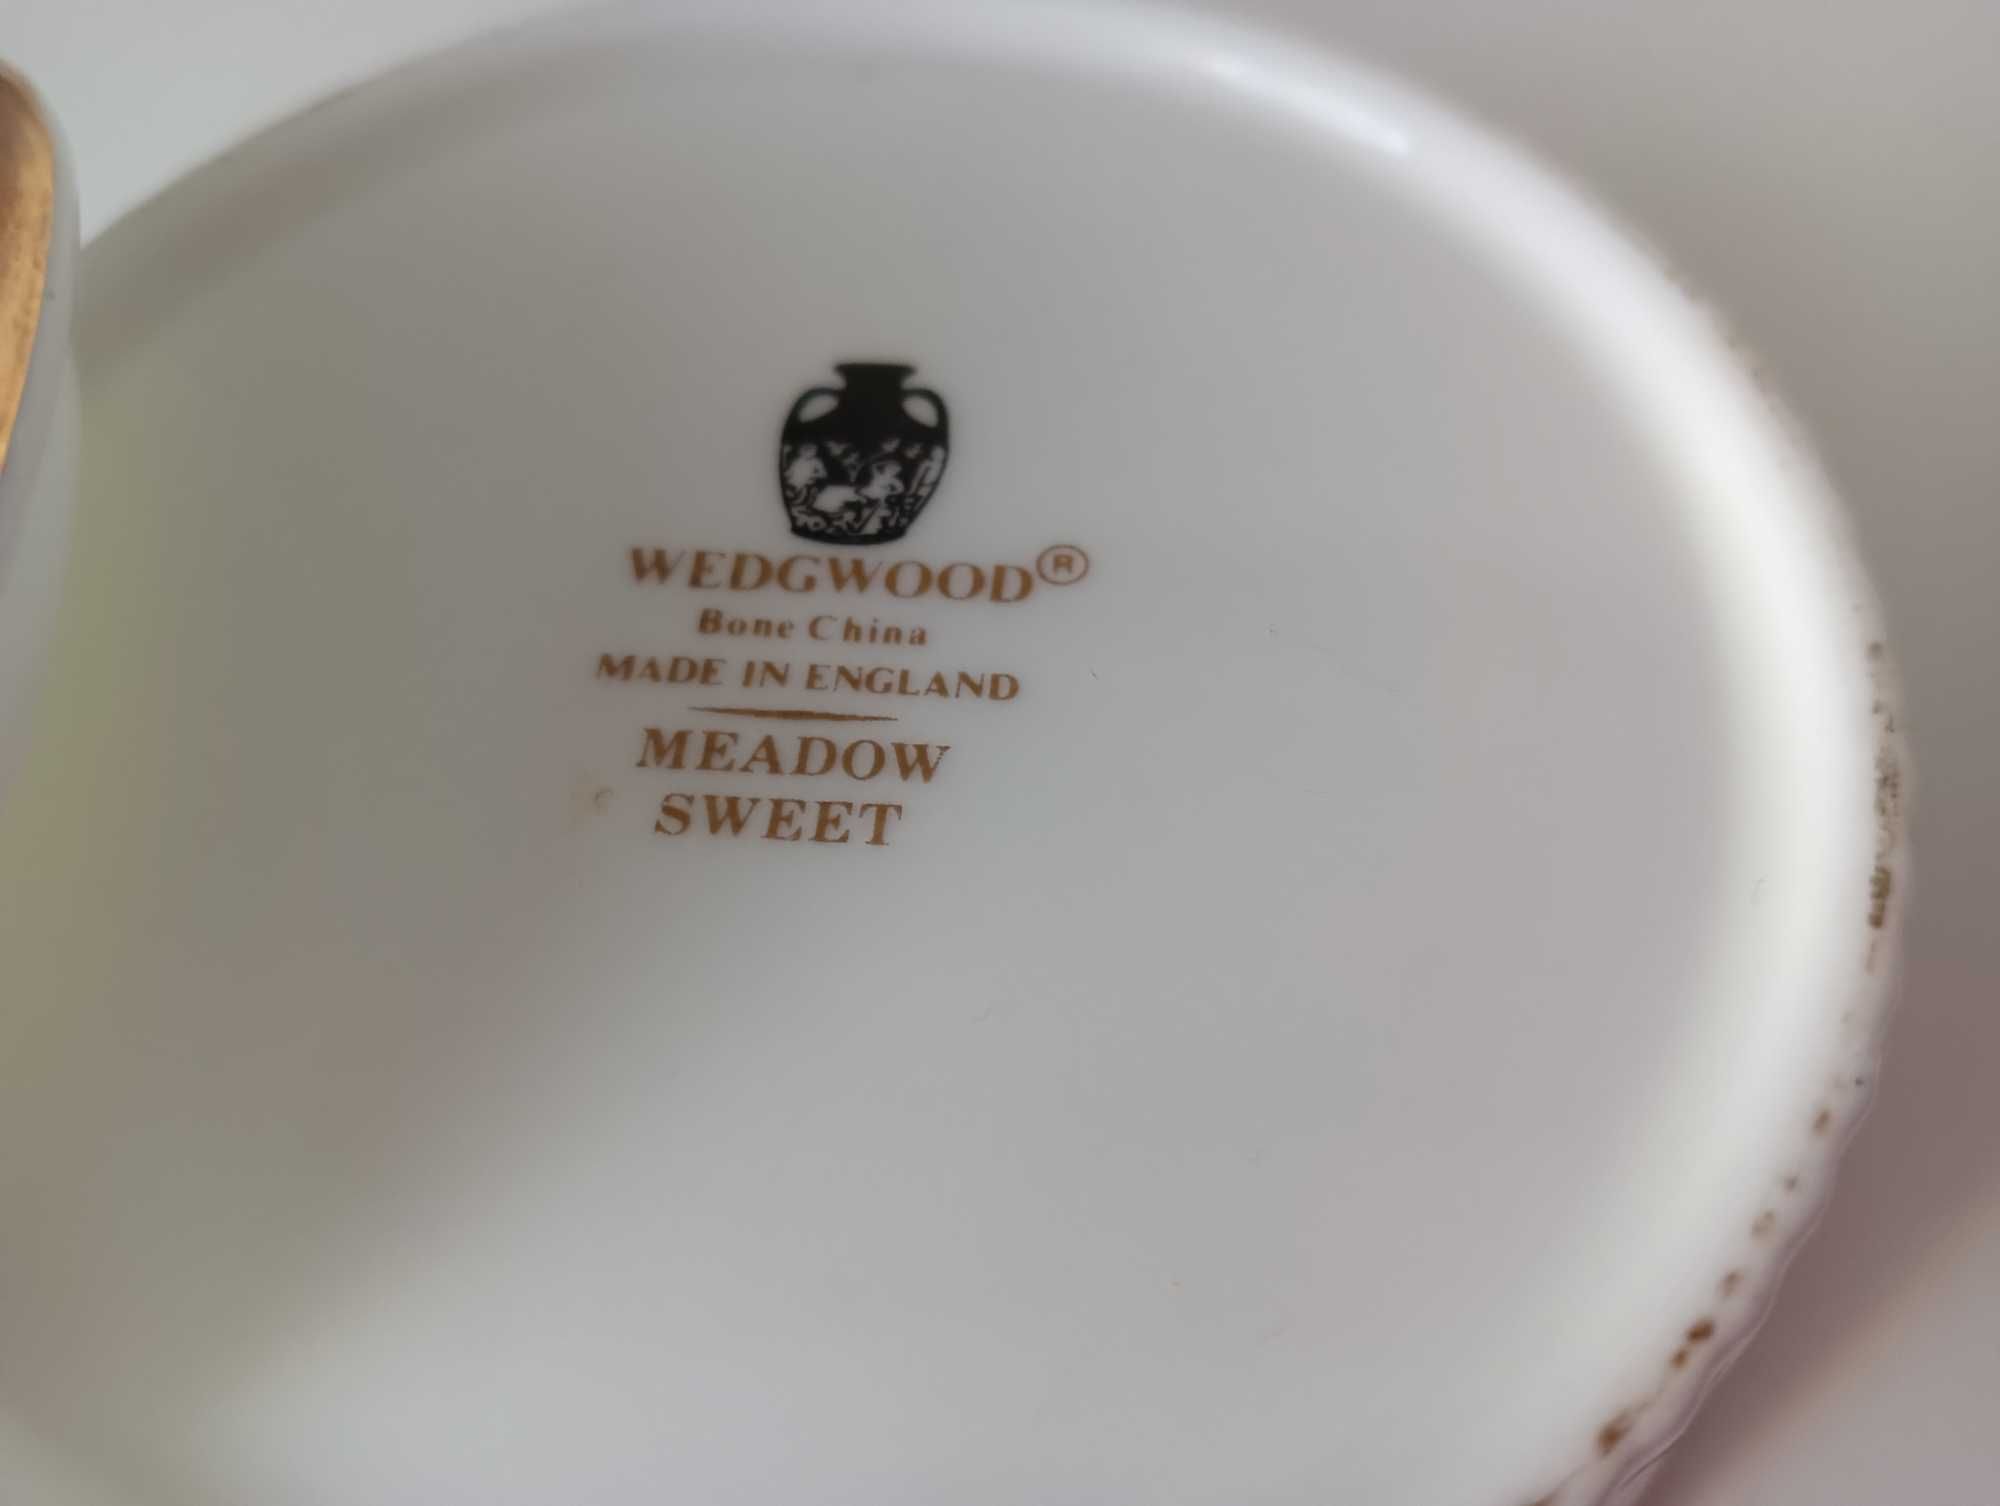 Wedgwood puzderko porcelana "Meadow Sweet".